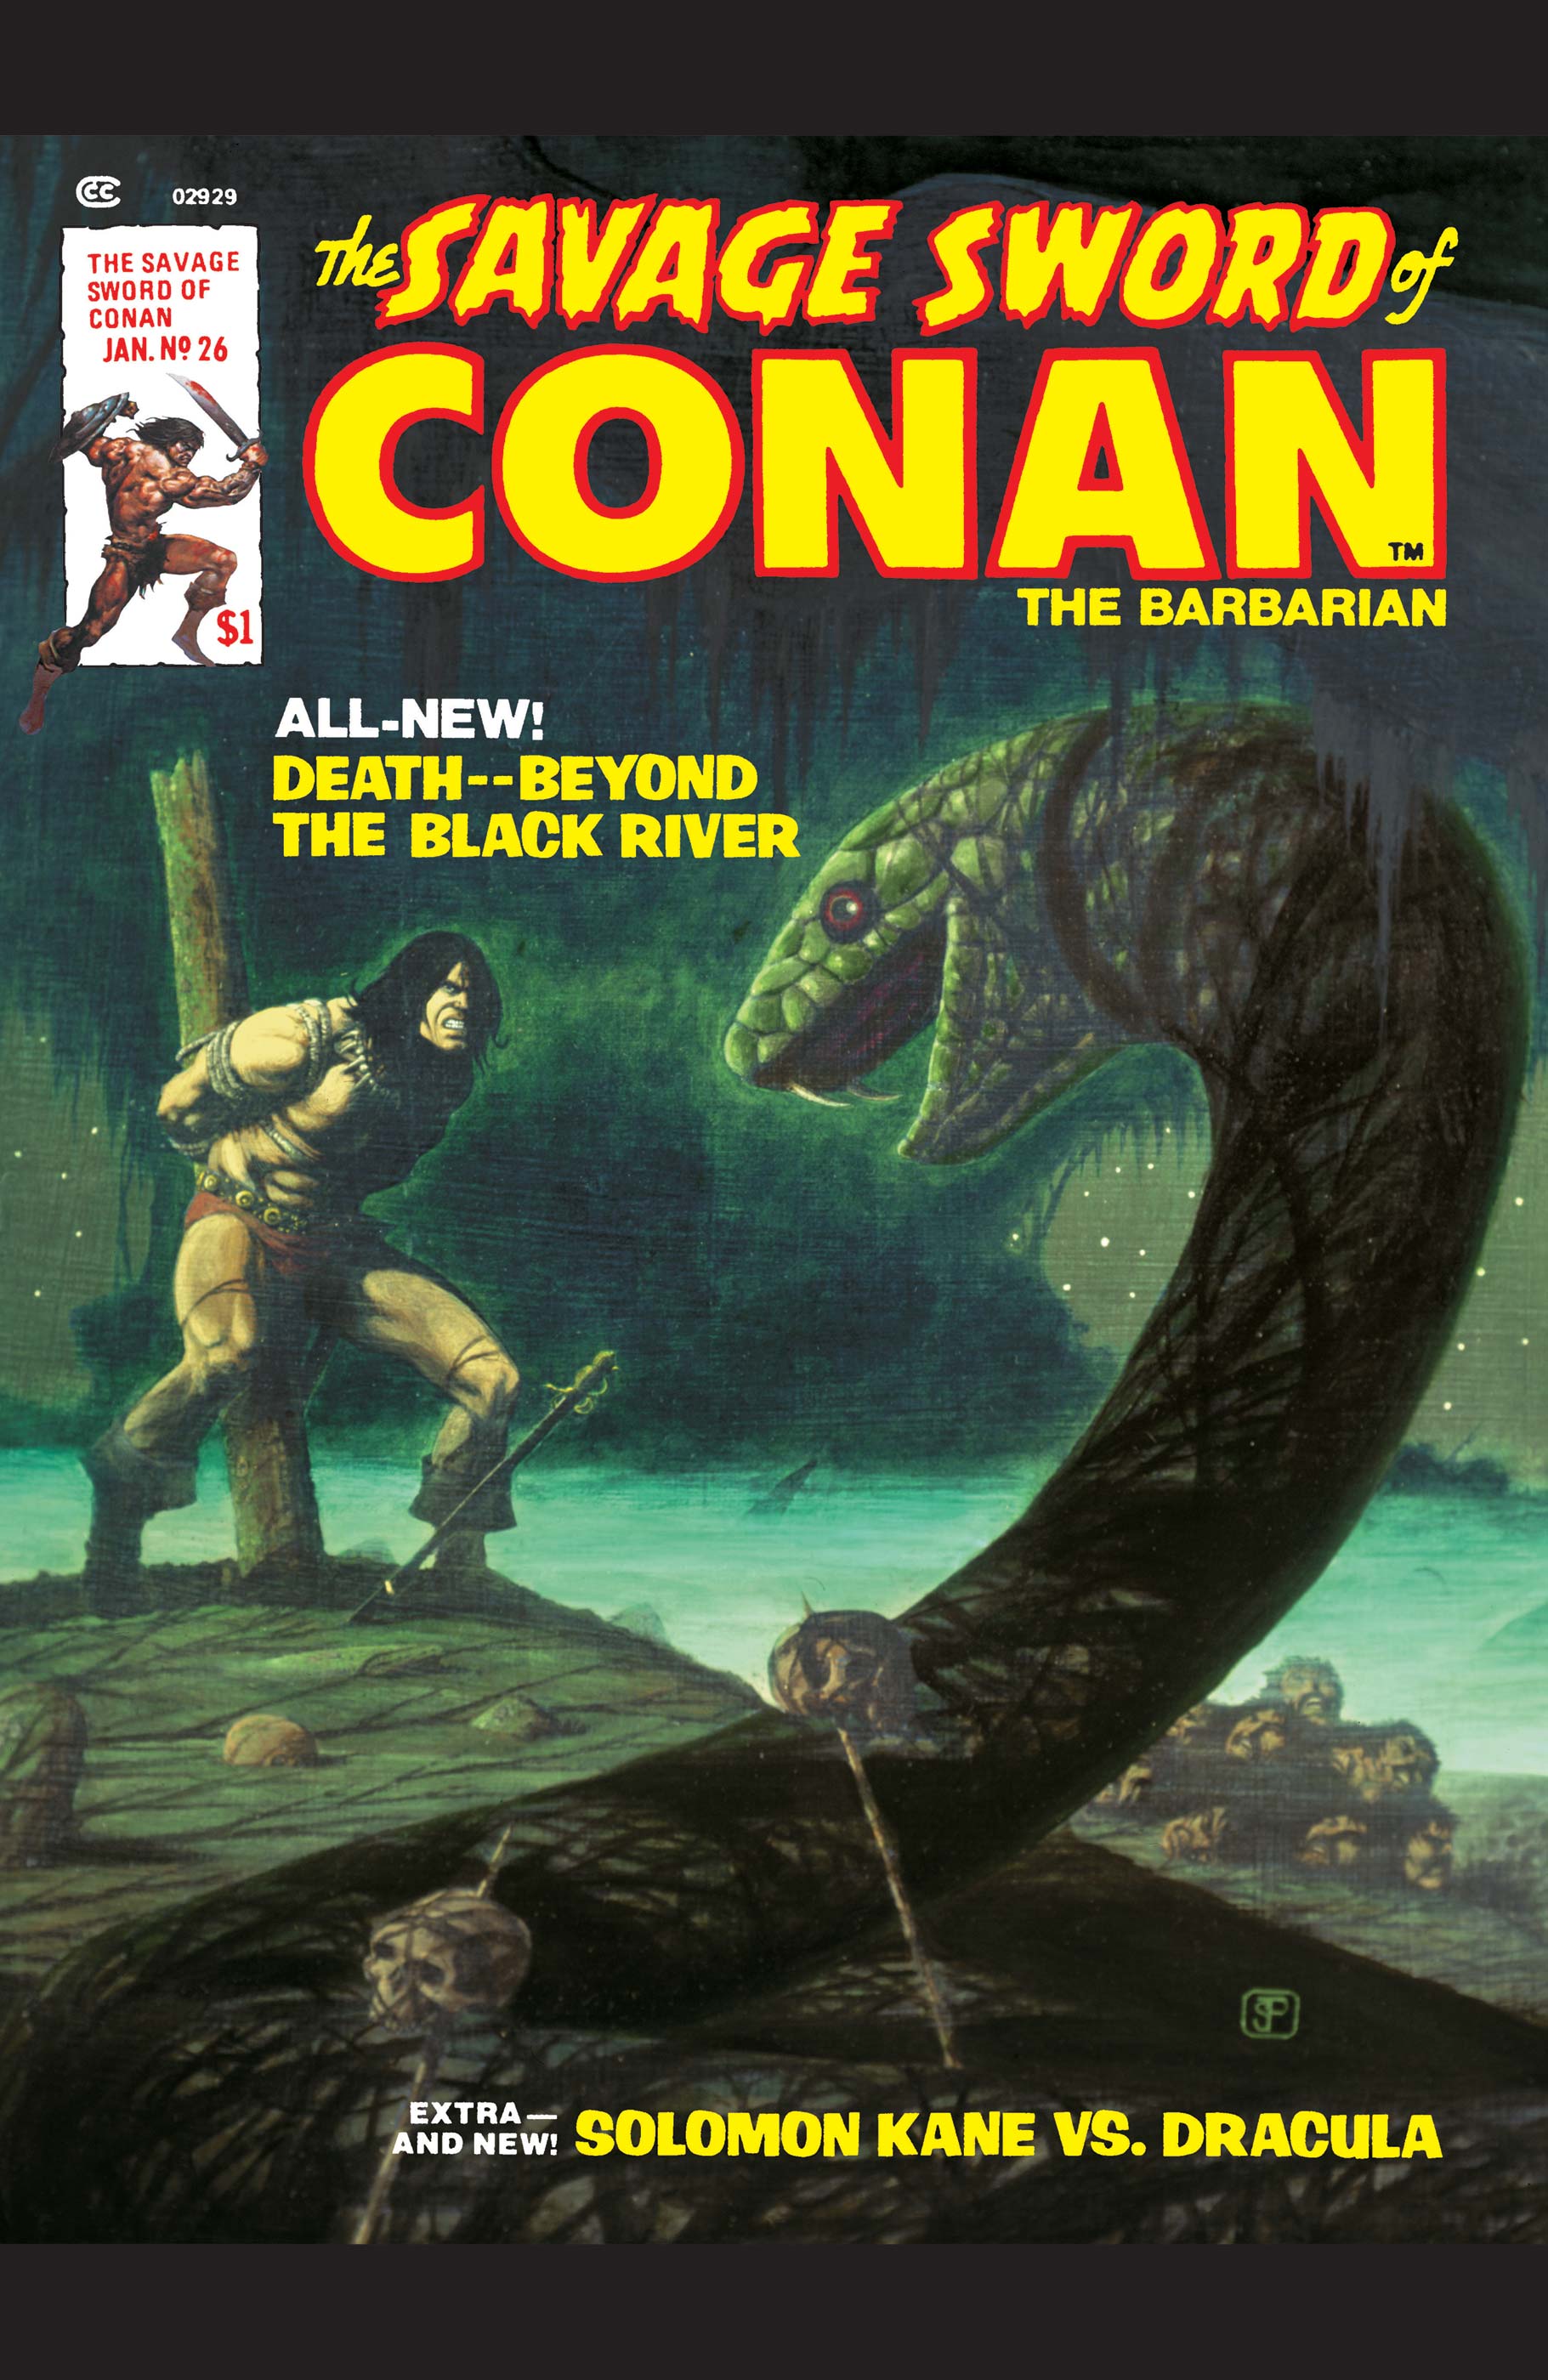 The Savage Sword of Conan (1974) #26